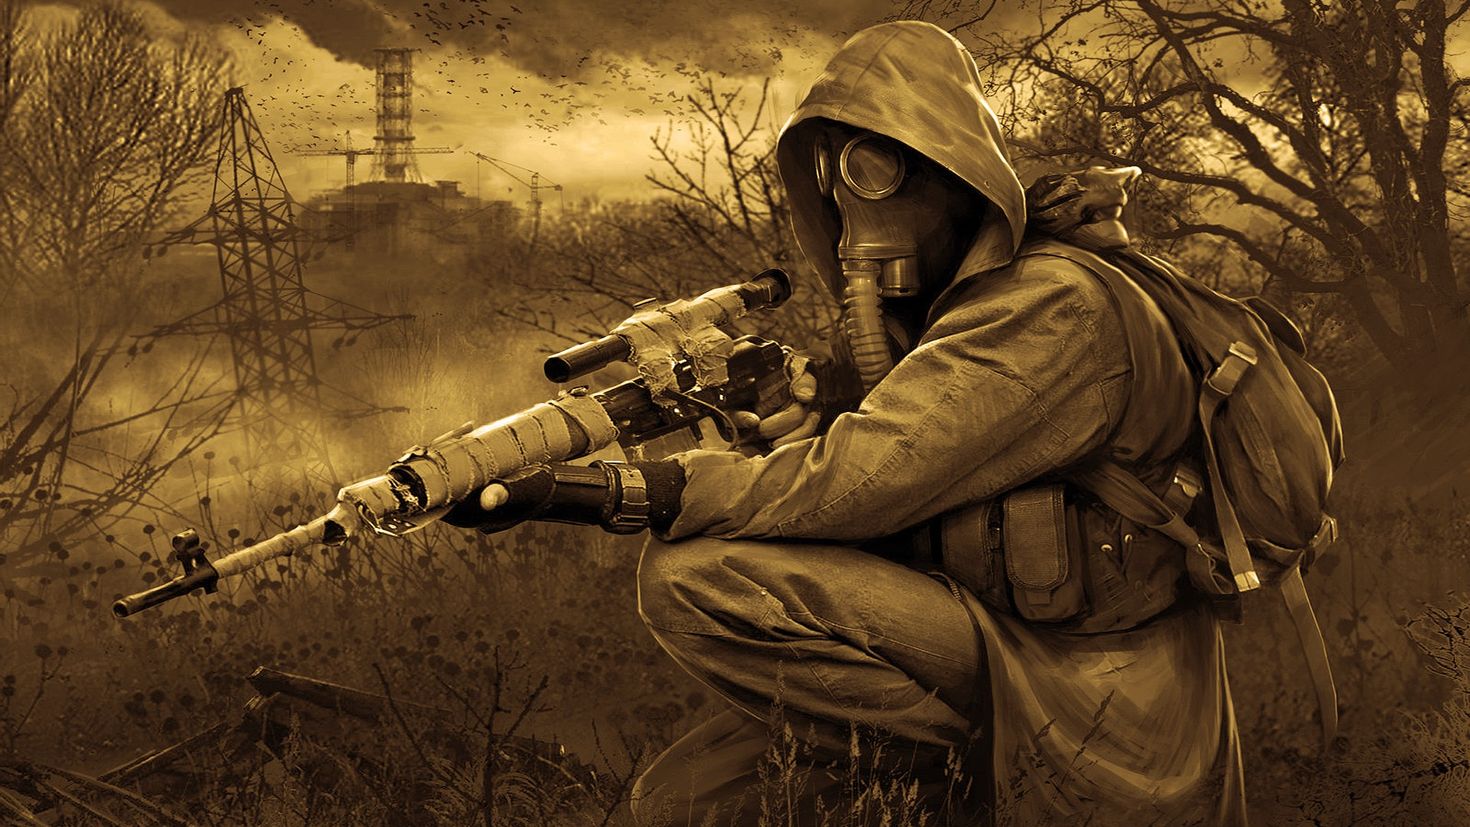 Stalker Sniper Art. Сталкер 2 ава. Сталкер тень Чернобыля арт СВД. Сталкер снайпер на прозрачном фоне.